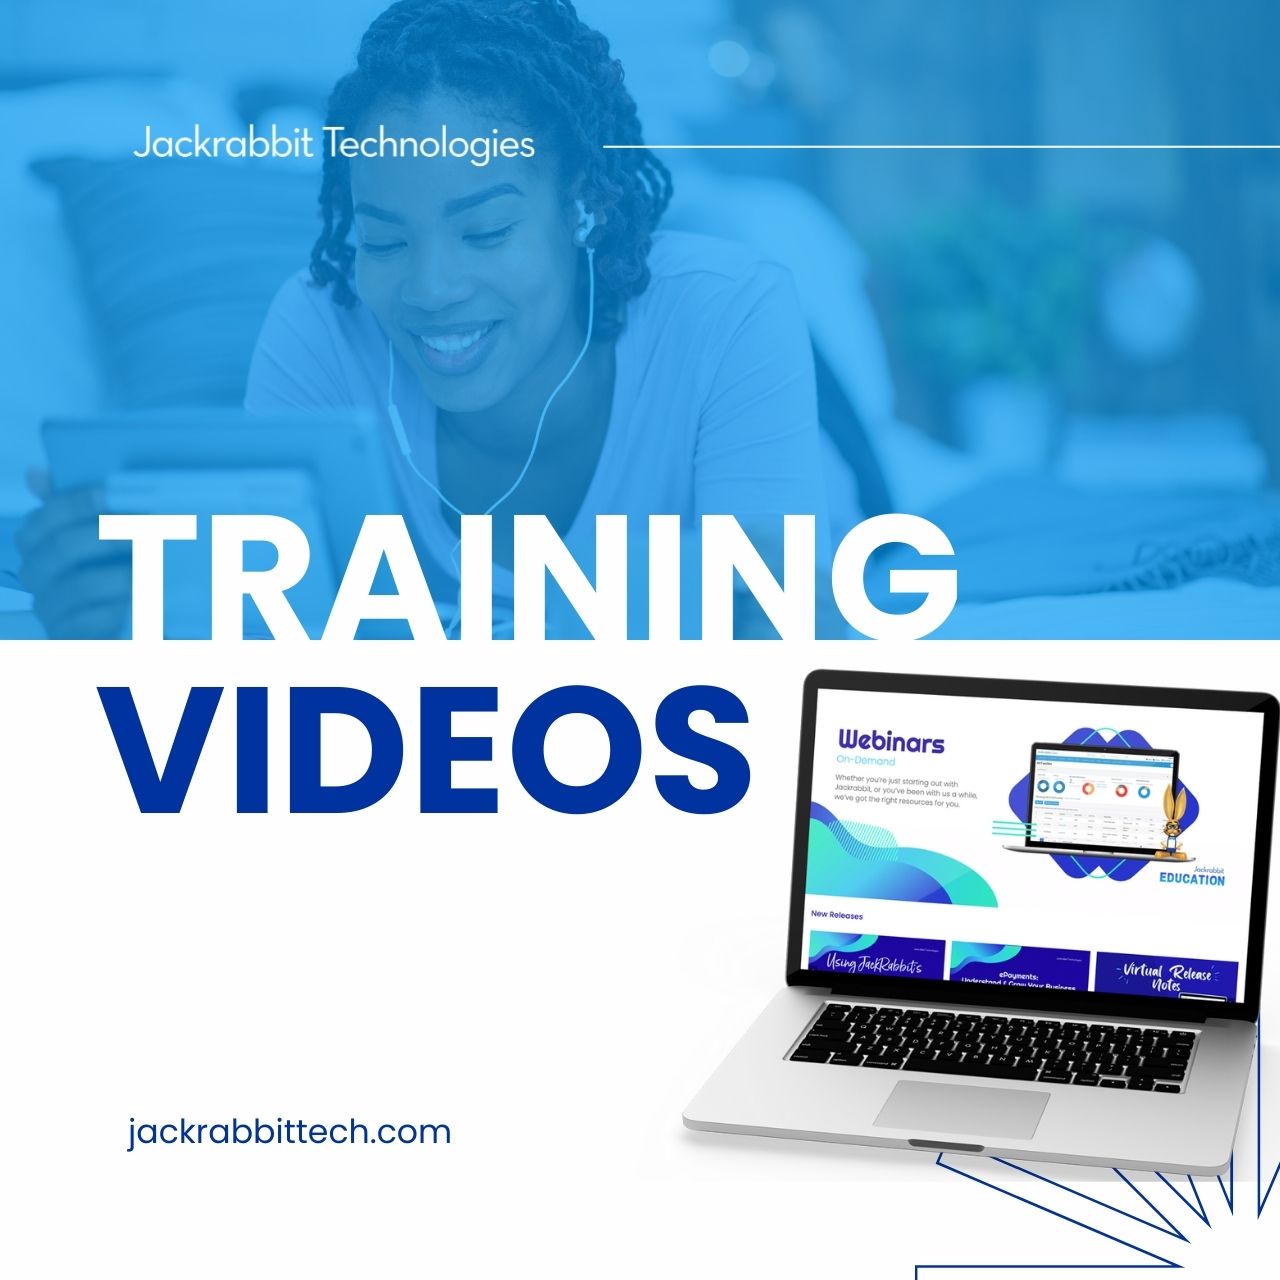 jackrabbit web-based training videos